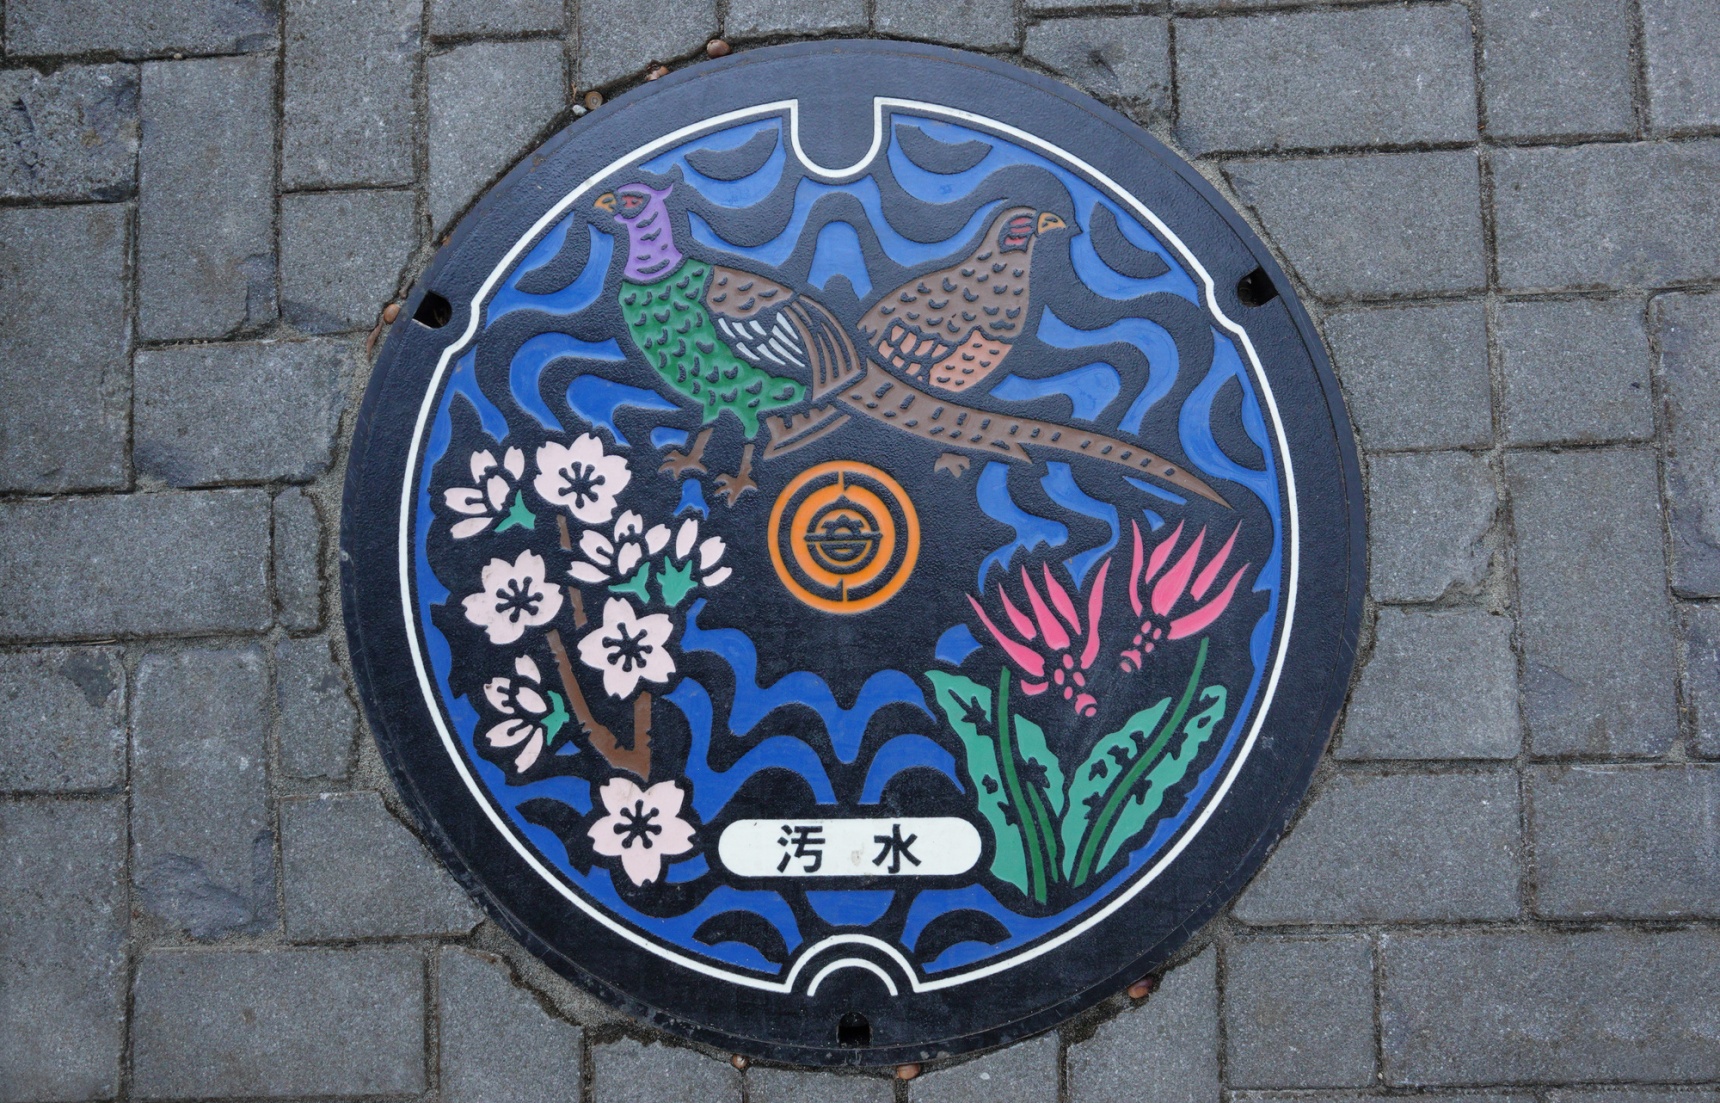 Japanese Manholes: Art Under Your Feet